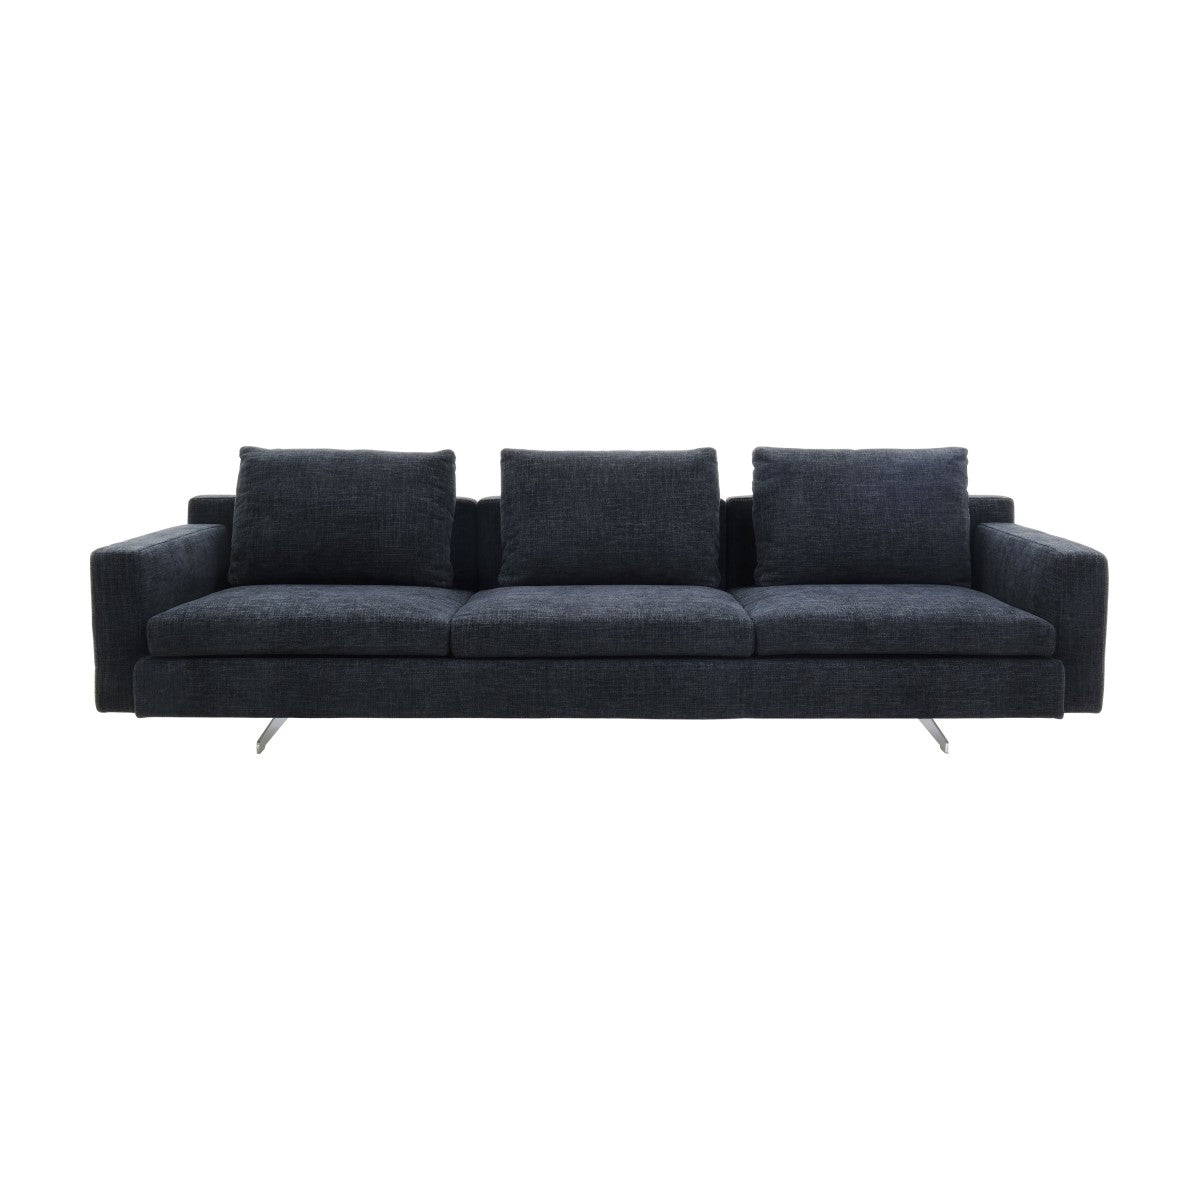 Sinema Bespoke Upholstered Modern Style Five Seater Sofa MS9032G Custom Made To Order